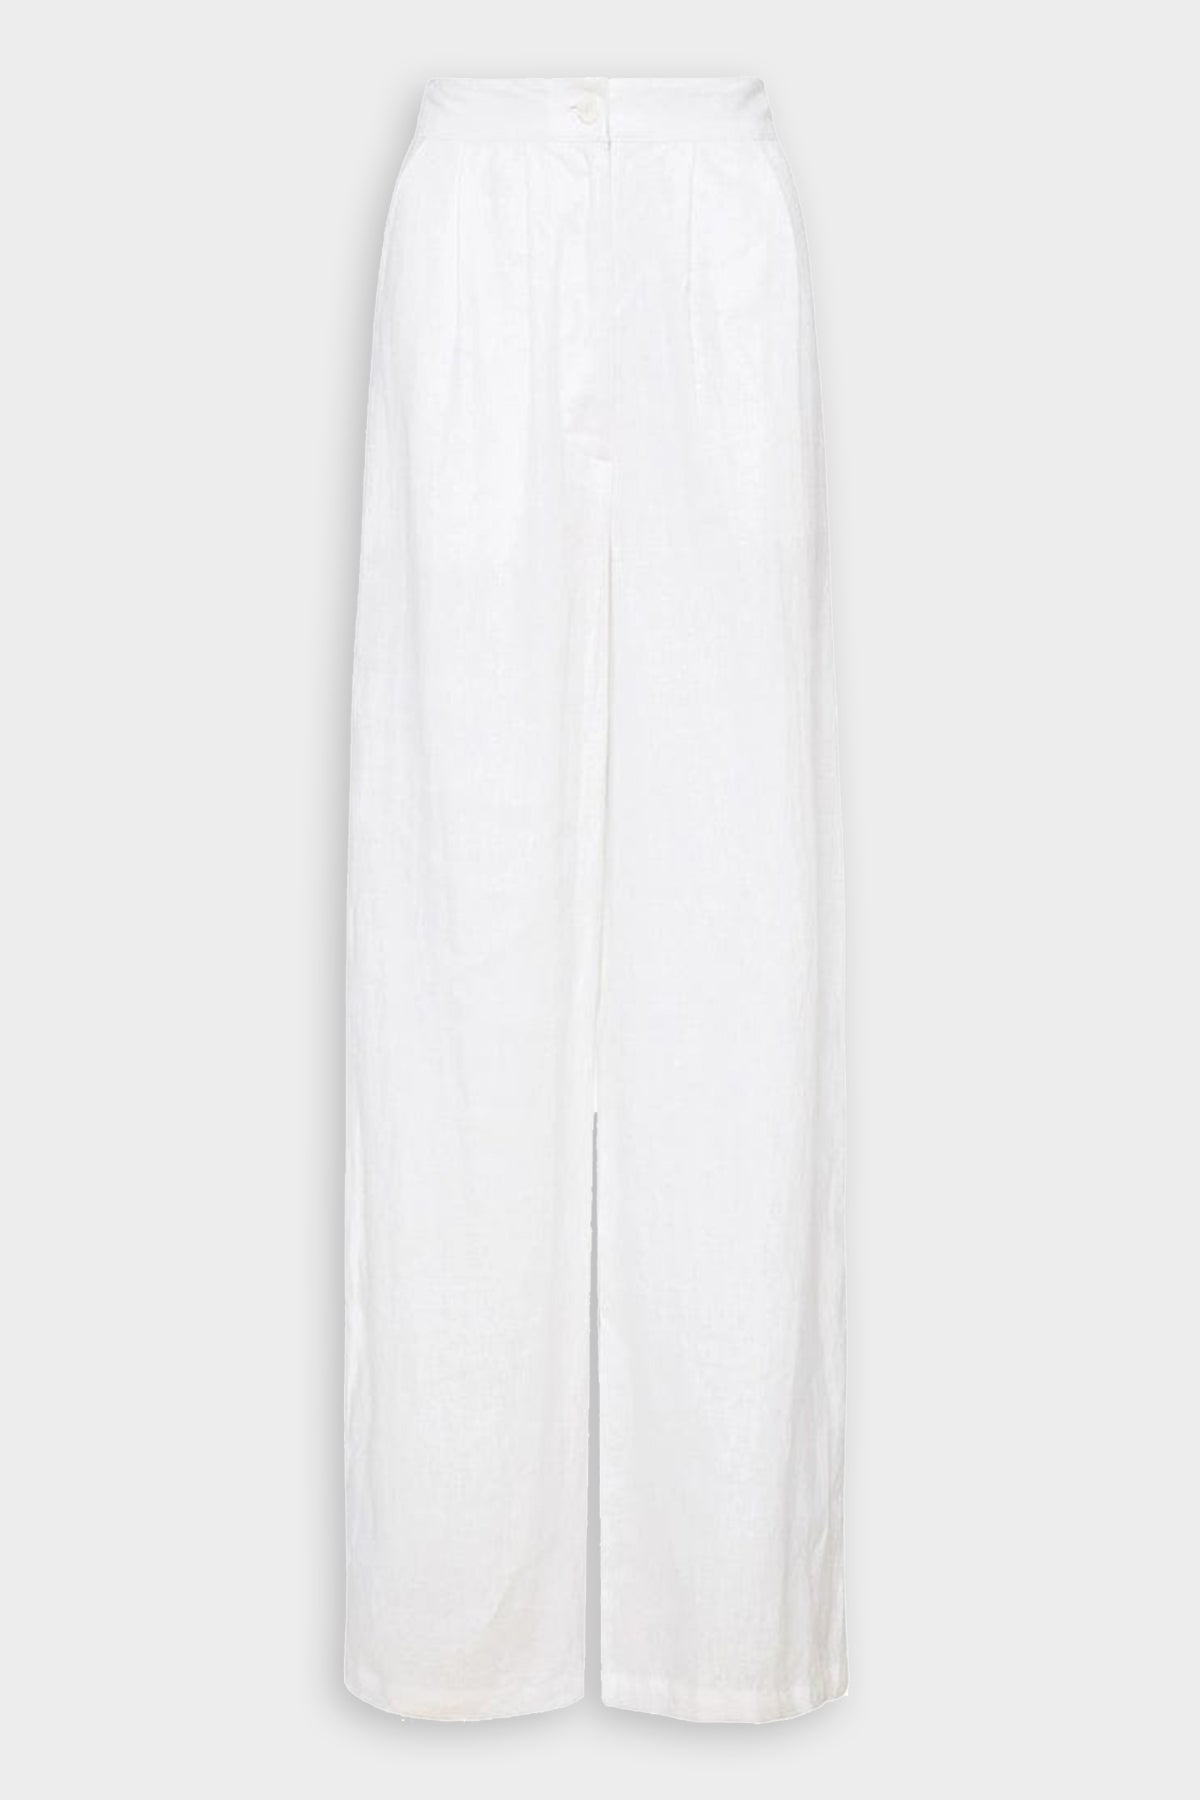 Circa Pants in White - shop-olivia.com